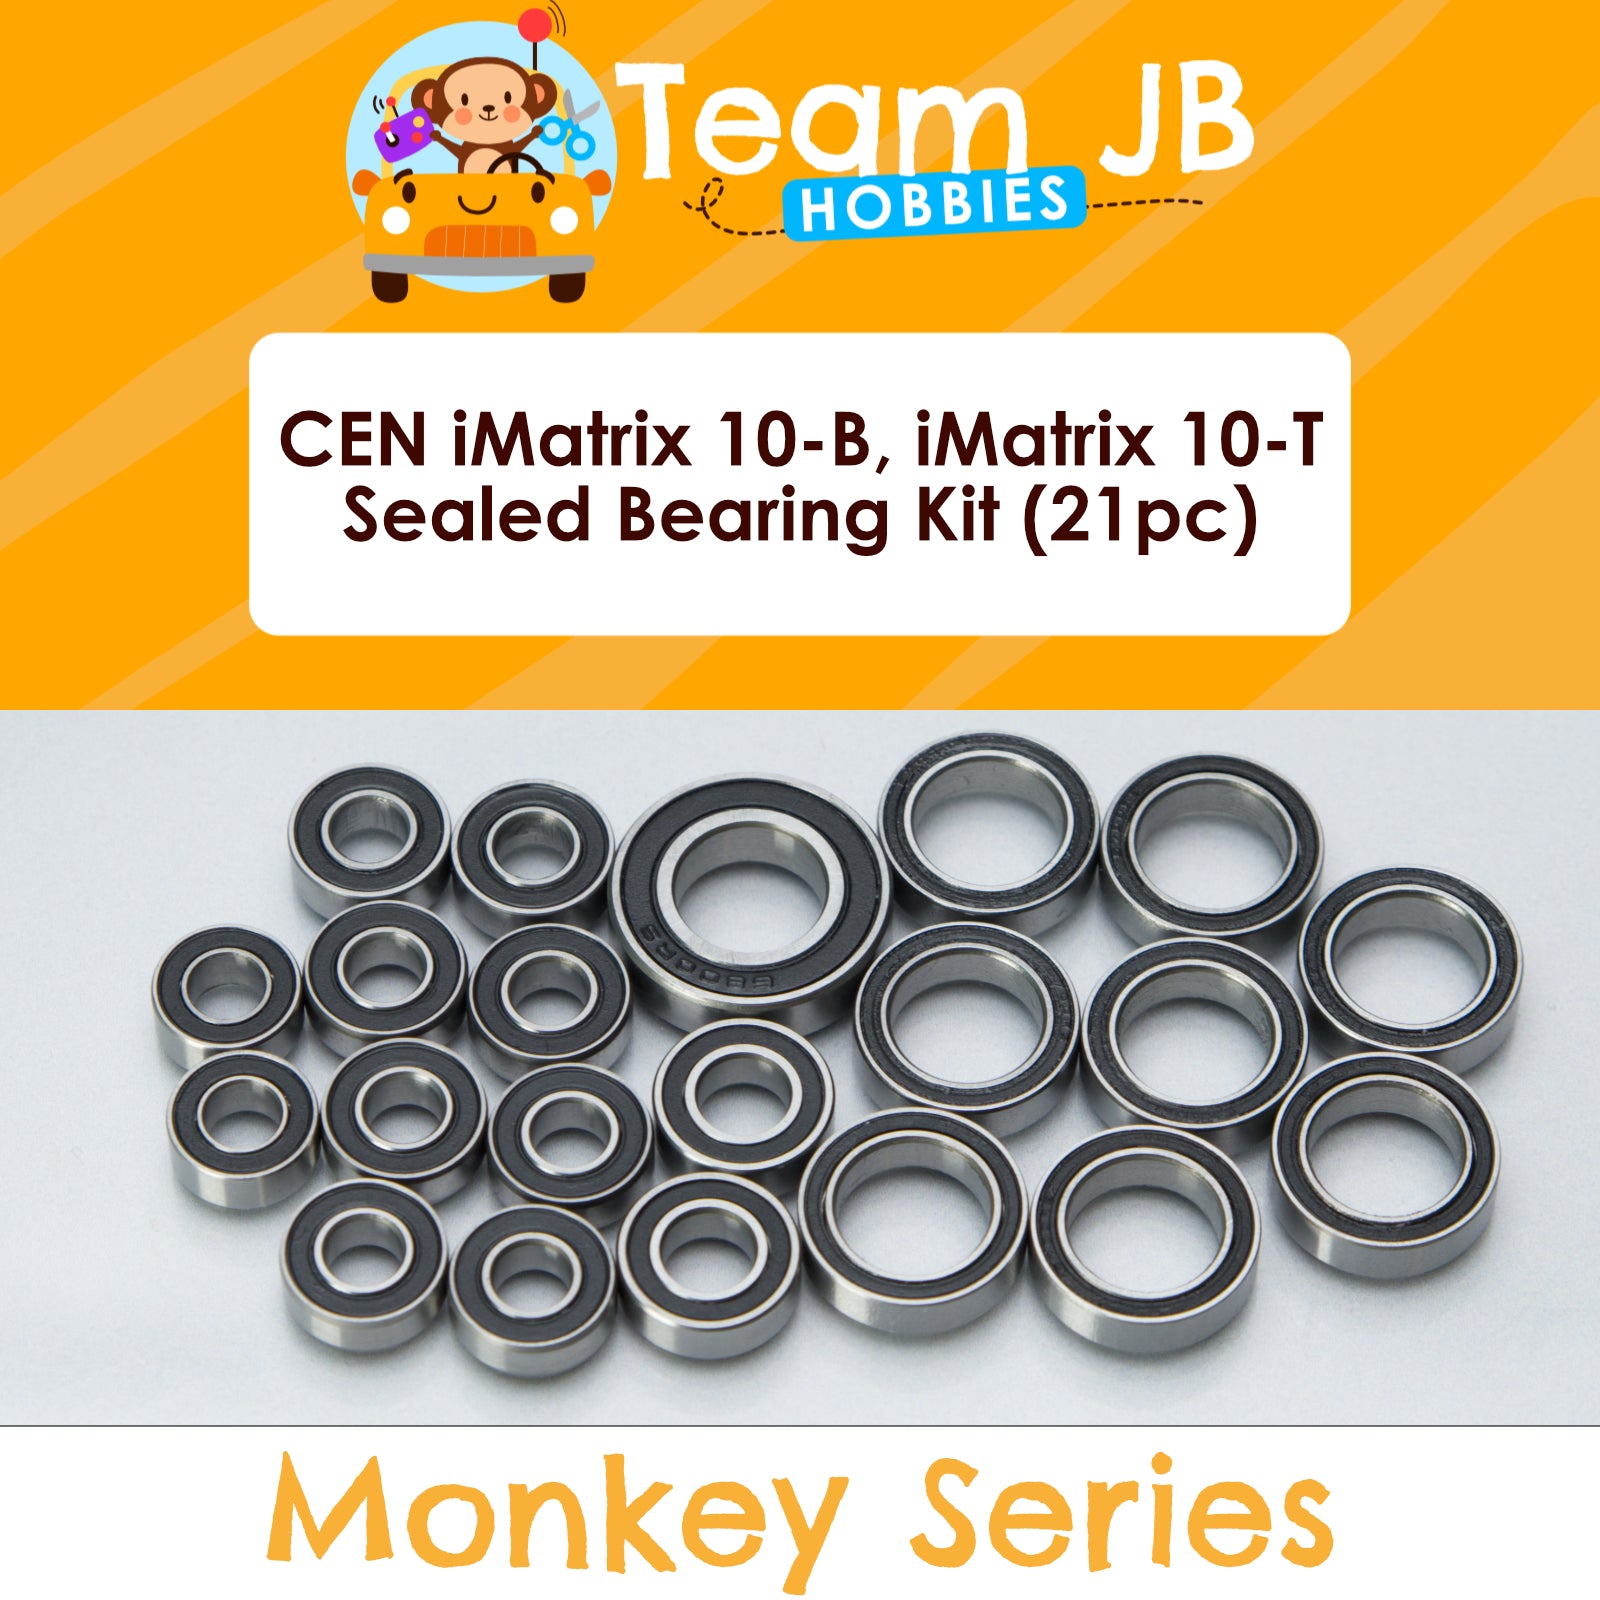 CEN iMatrix 10-B, iMatrix 10-T - Sealed Bearing Kit